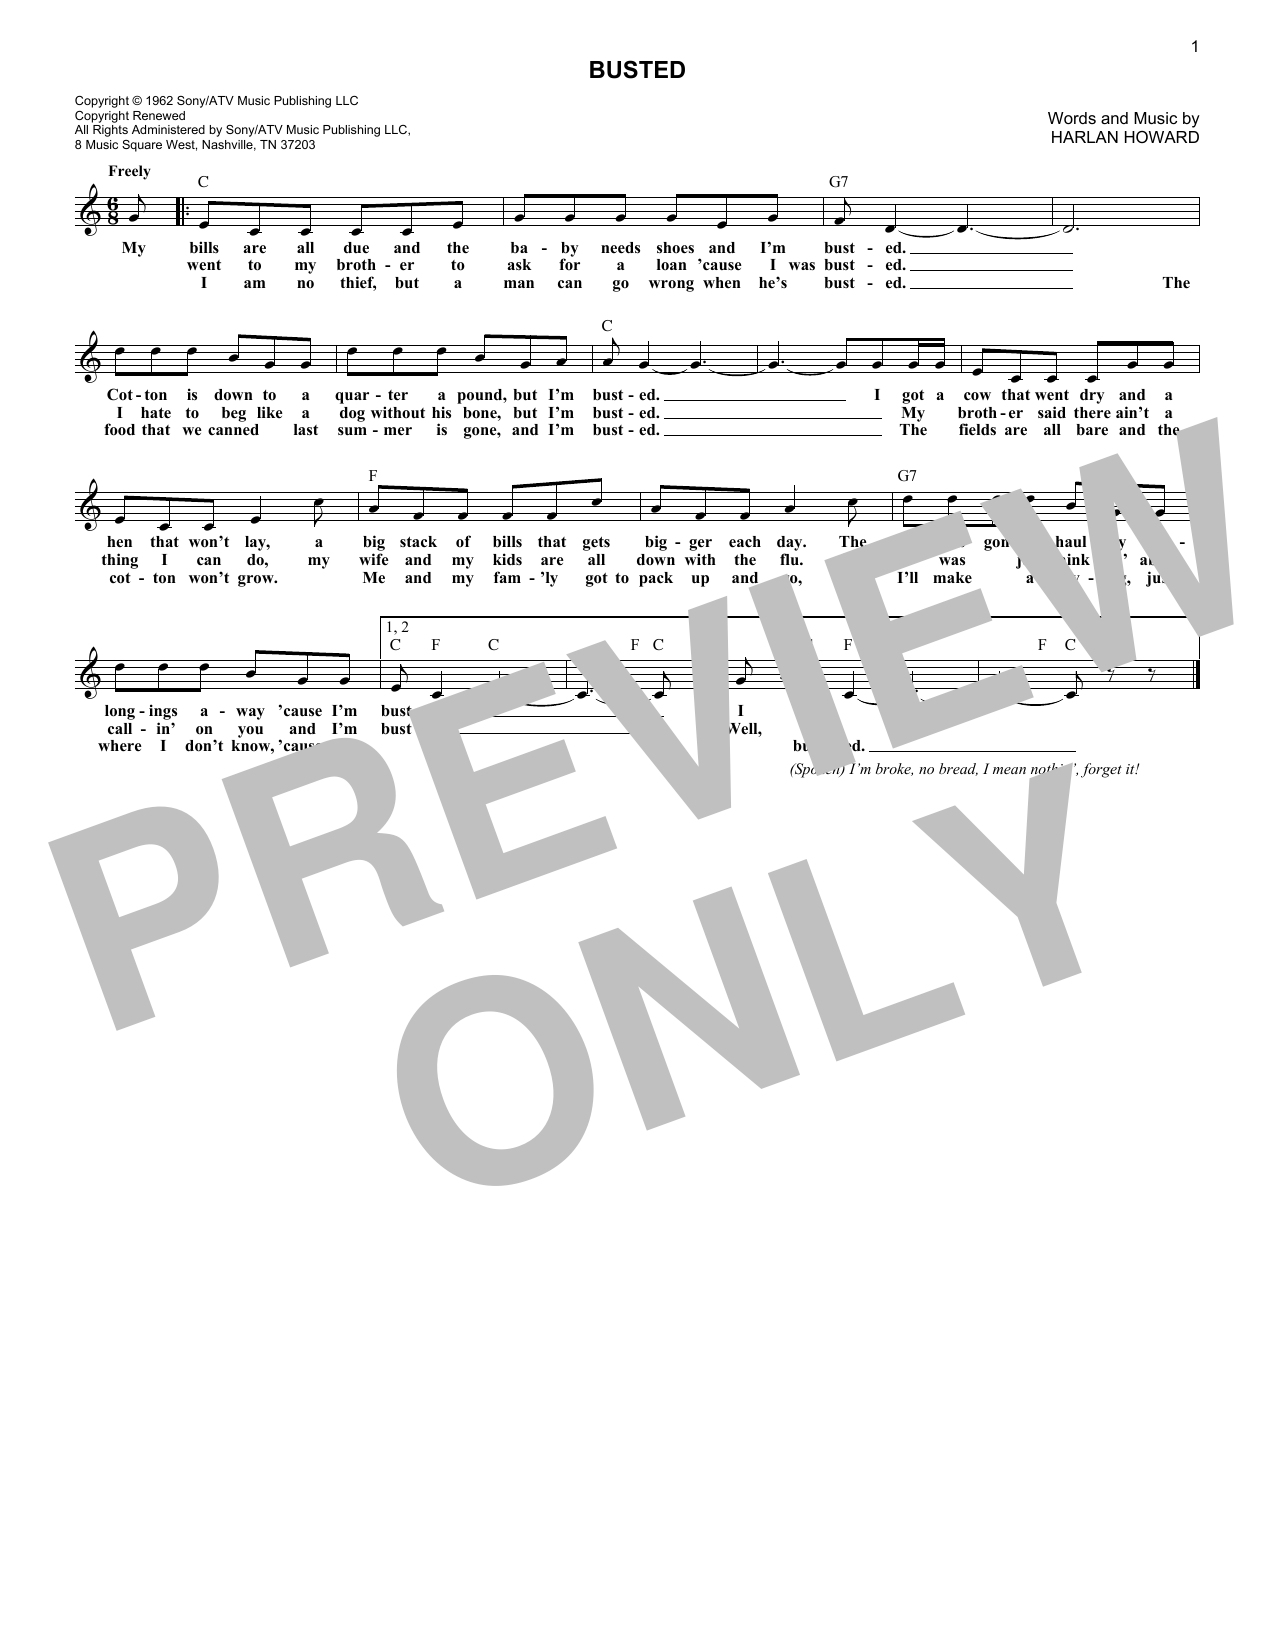 Harlan Howard Busted Sheet Music Notes & Chords for Melody Line, Lyrics & Chords - Download or Print PDF